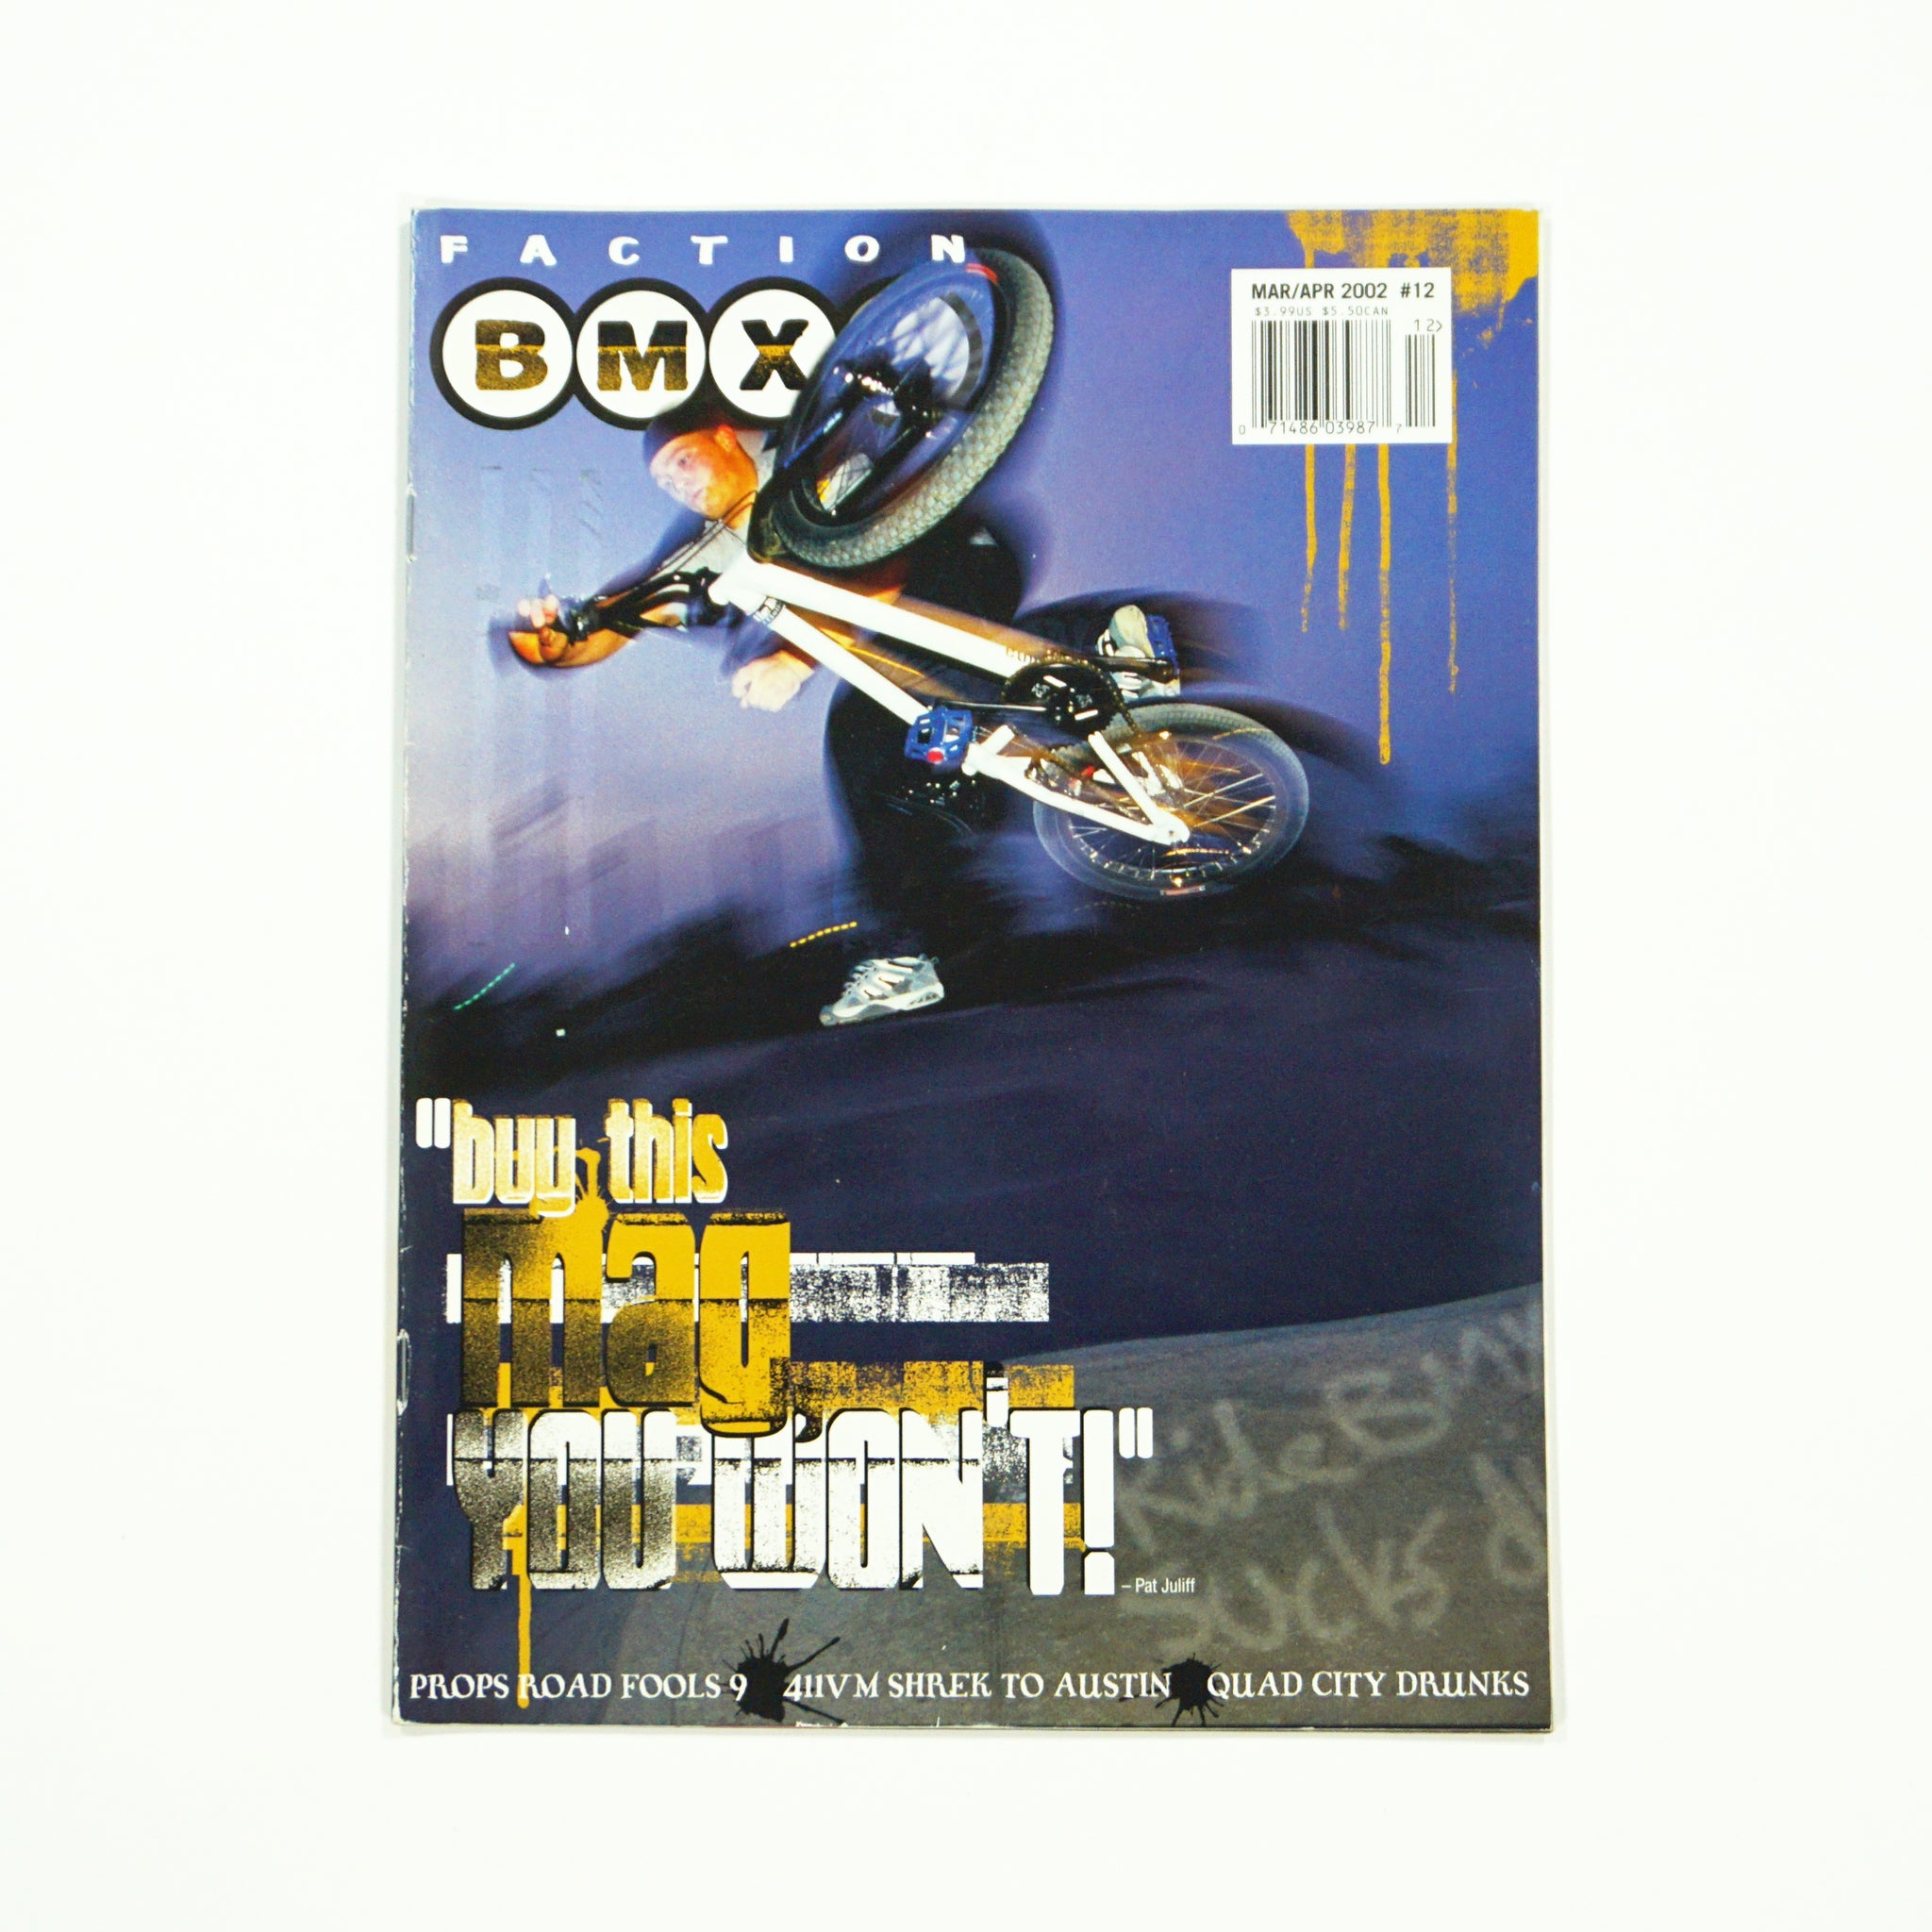 Faction BMX Magazine - March/April 2002 Issue